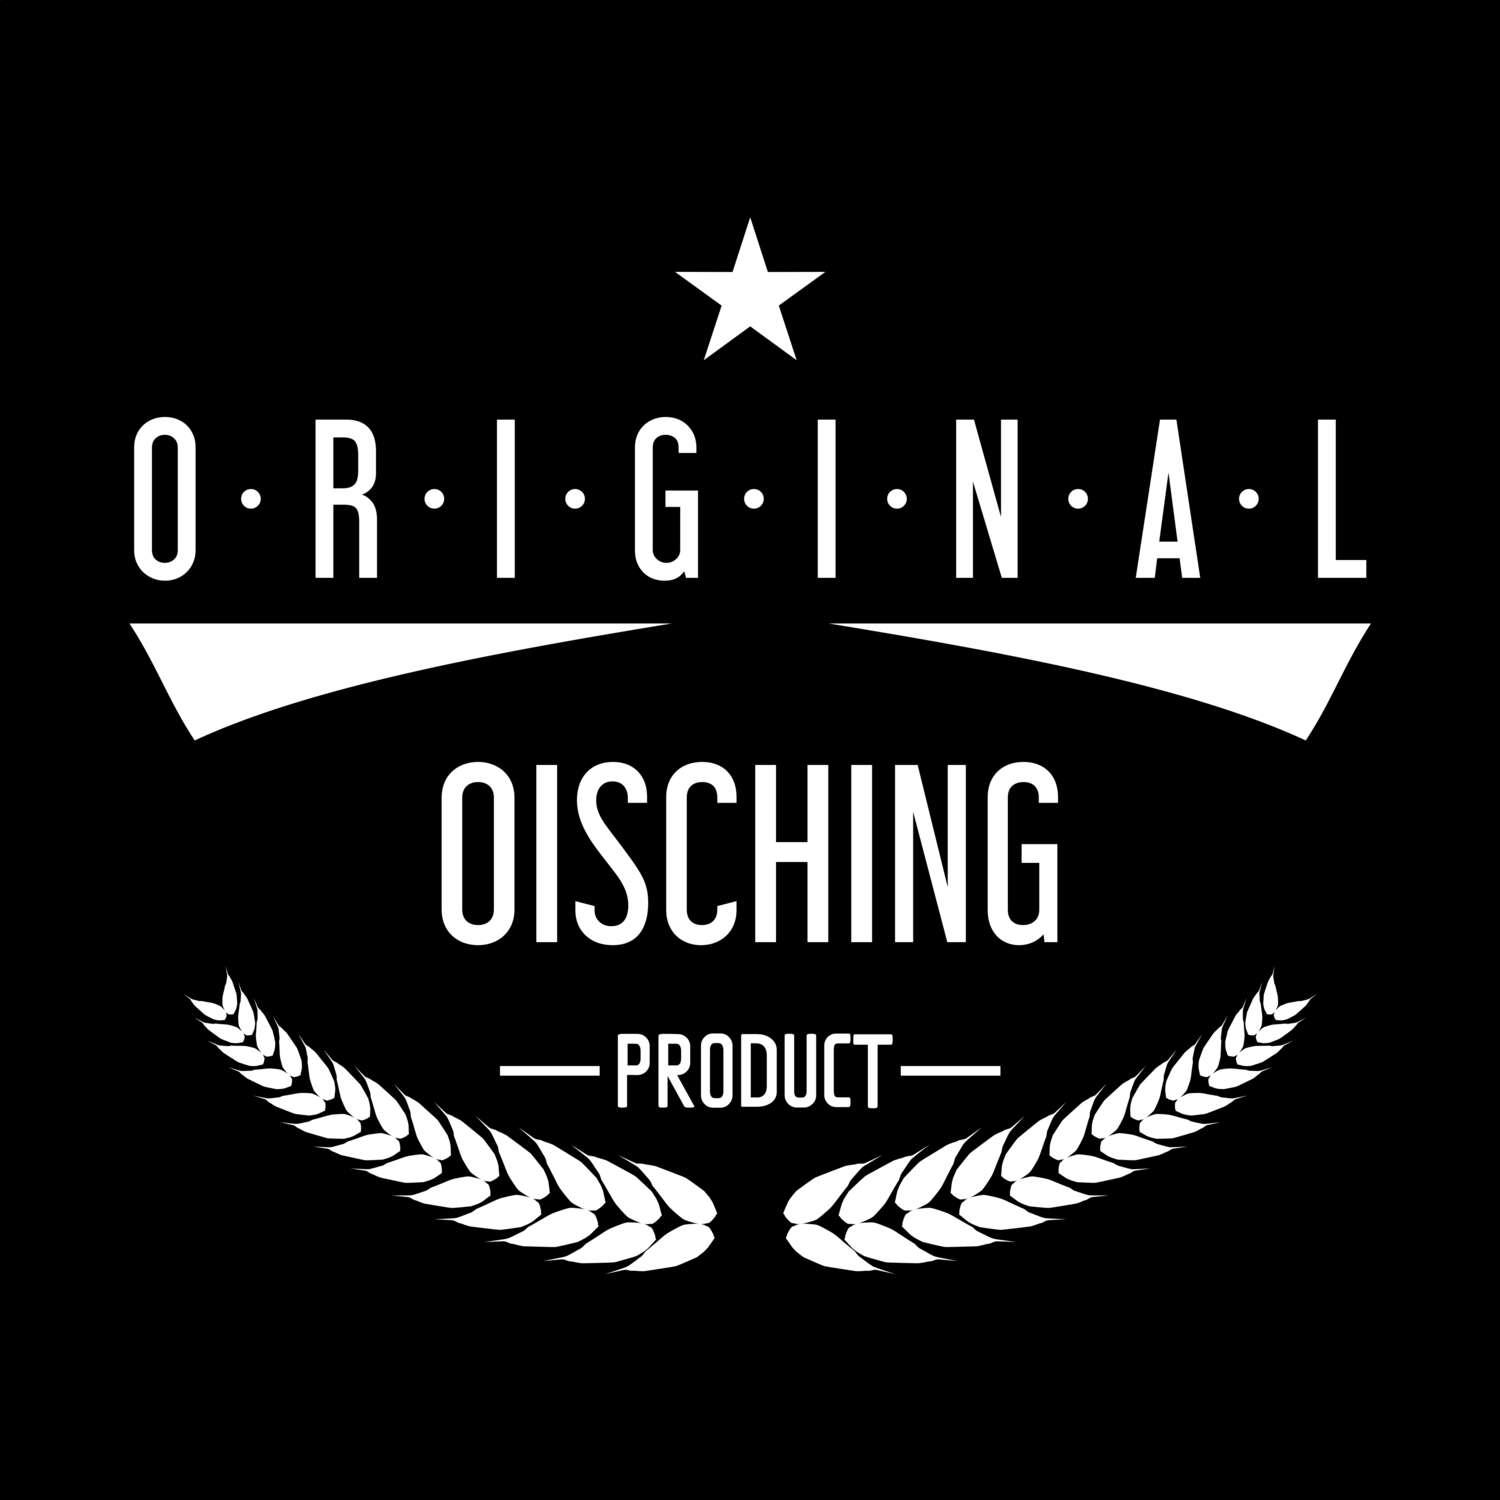 Oisching T-Shirt »Original Product«